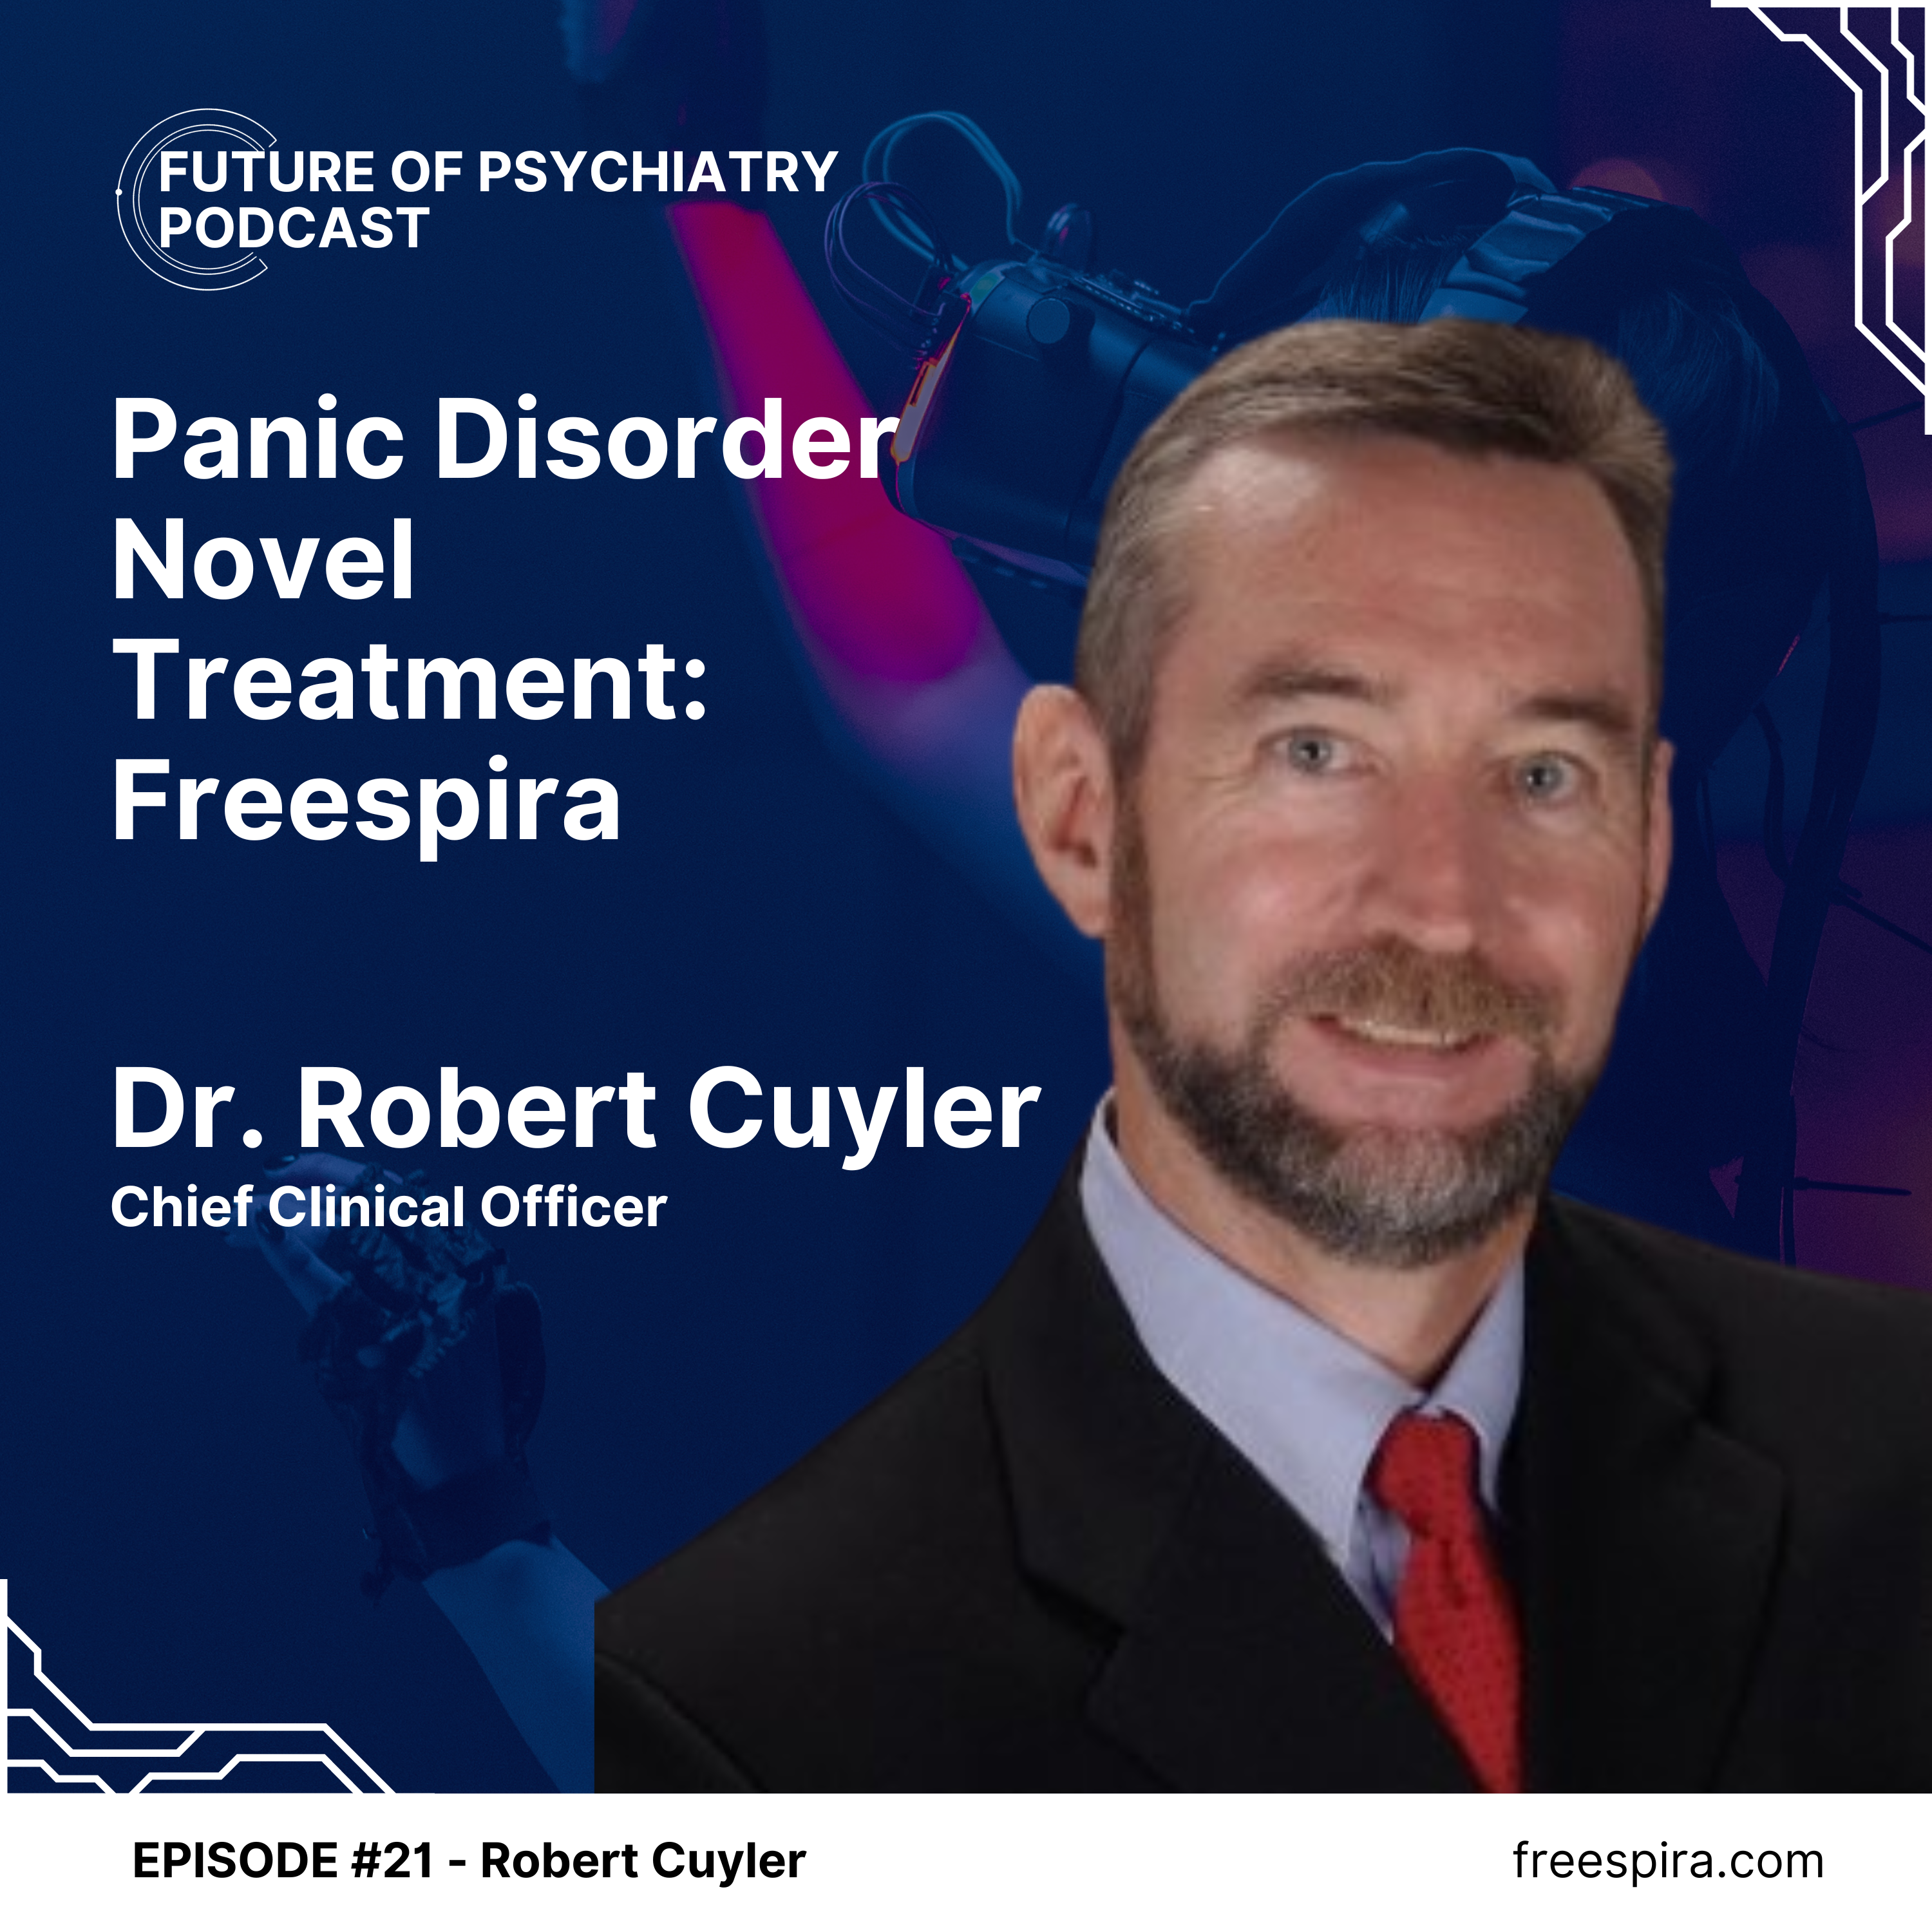 Panic Disorder Novel Treatment: Freespira, with Dr. Robert Cuyler